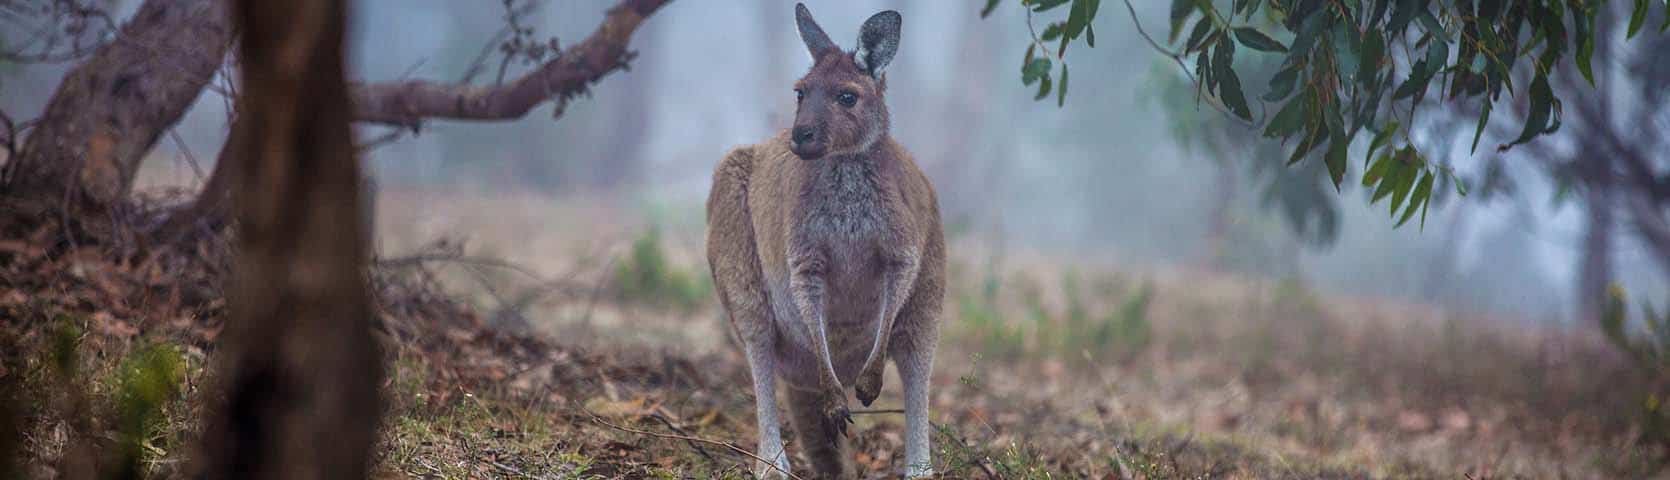 Kangaroo on Kangaroo Island. Tourism Australia.